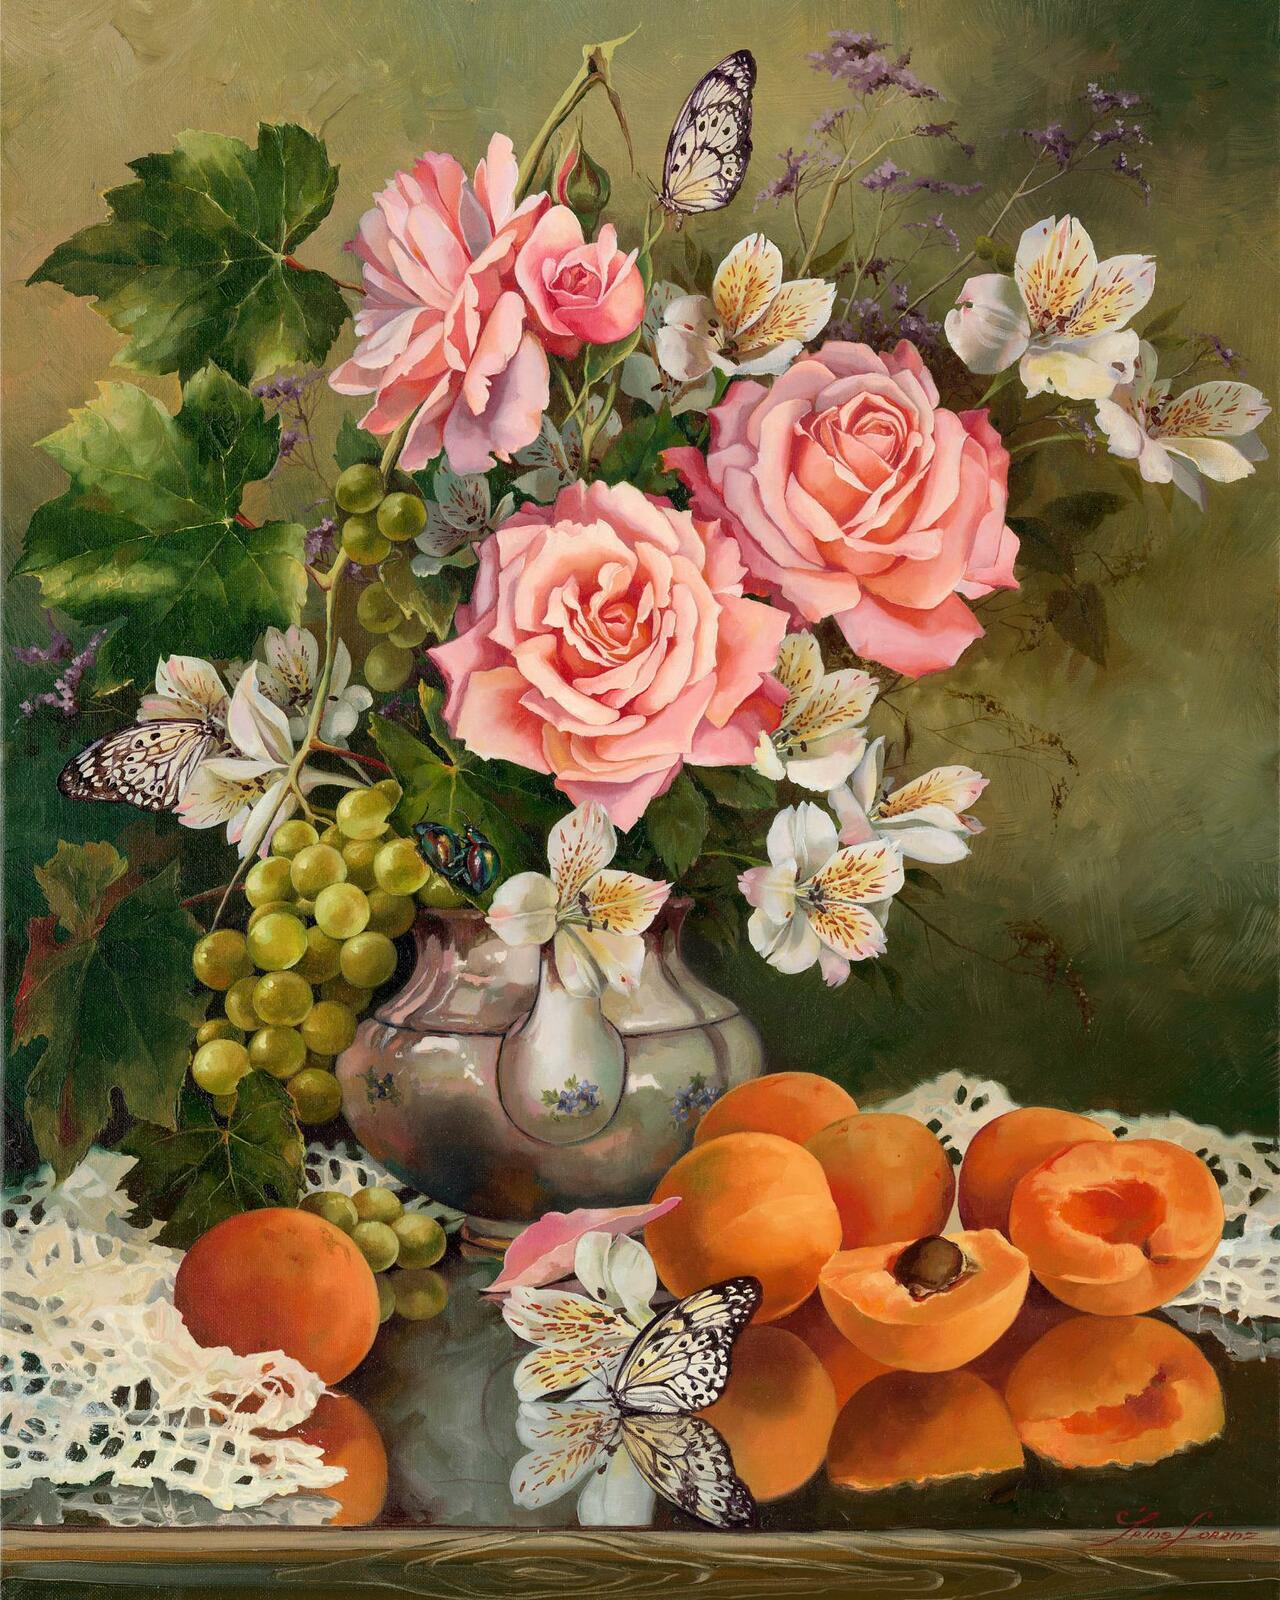 “@ArtByIva: #StillLife #grape #nature #art #roses #flowers #love #tulips 
#Apricot #Party #Oil on #canvas 20" x 28" http://t.co/pahZsO0Cdv